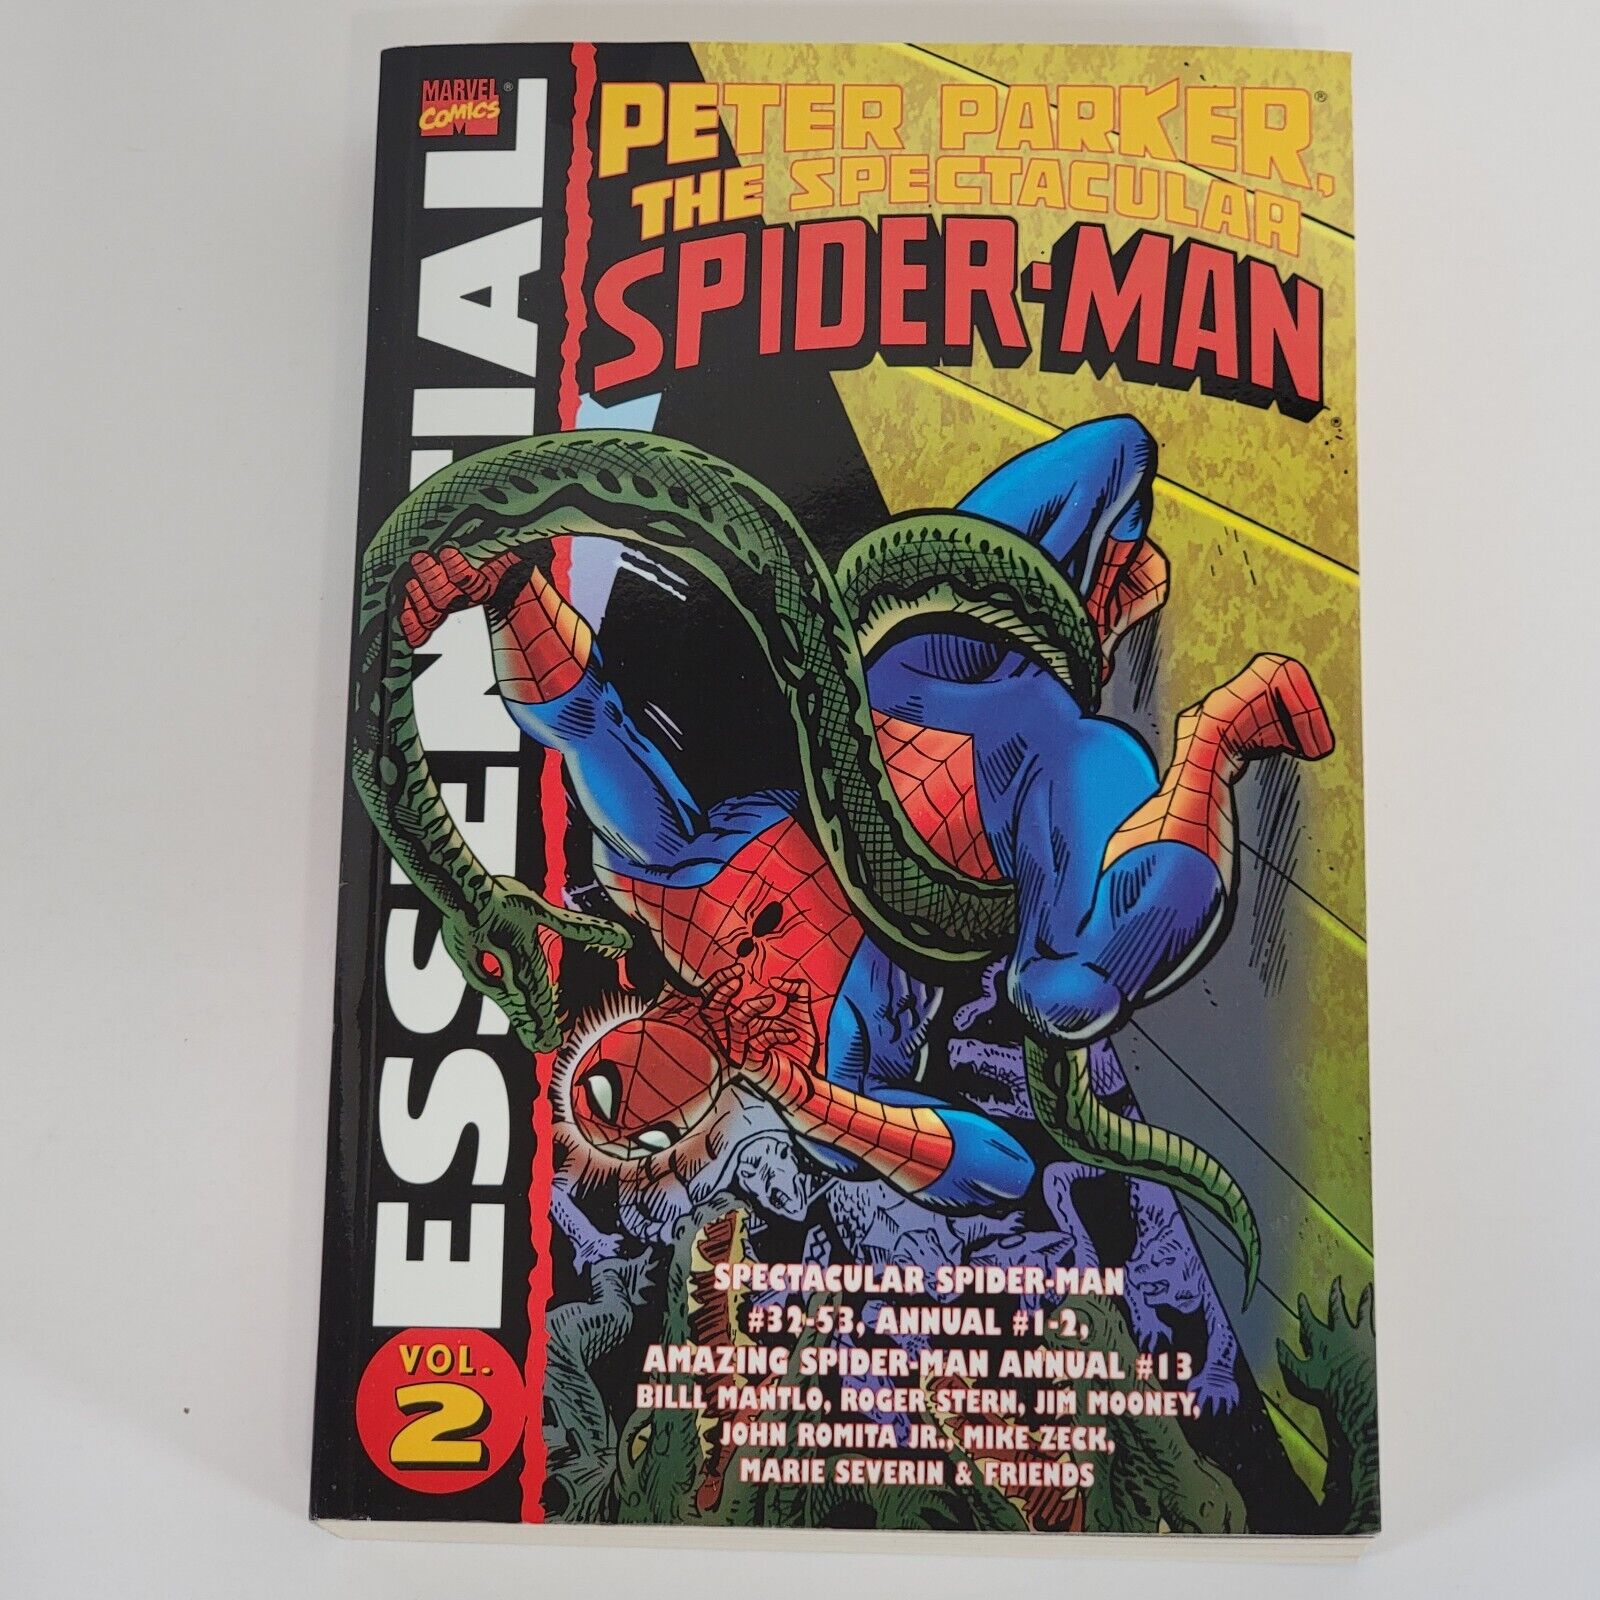 Essential Peter Parker, The Spectacular Spider-Man, Vol. 2 (Marvel Essentials)